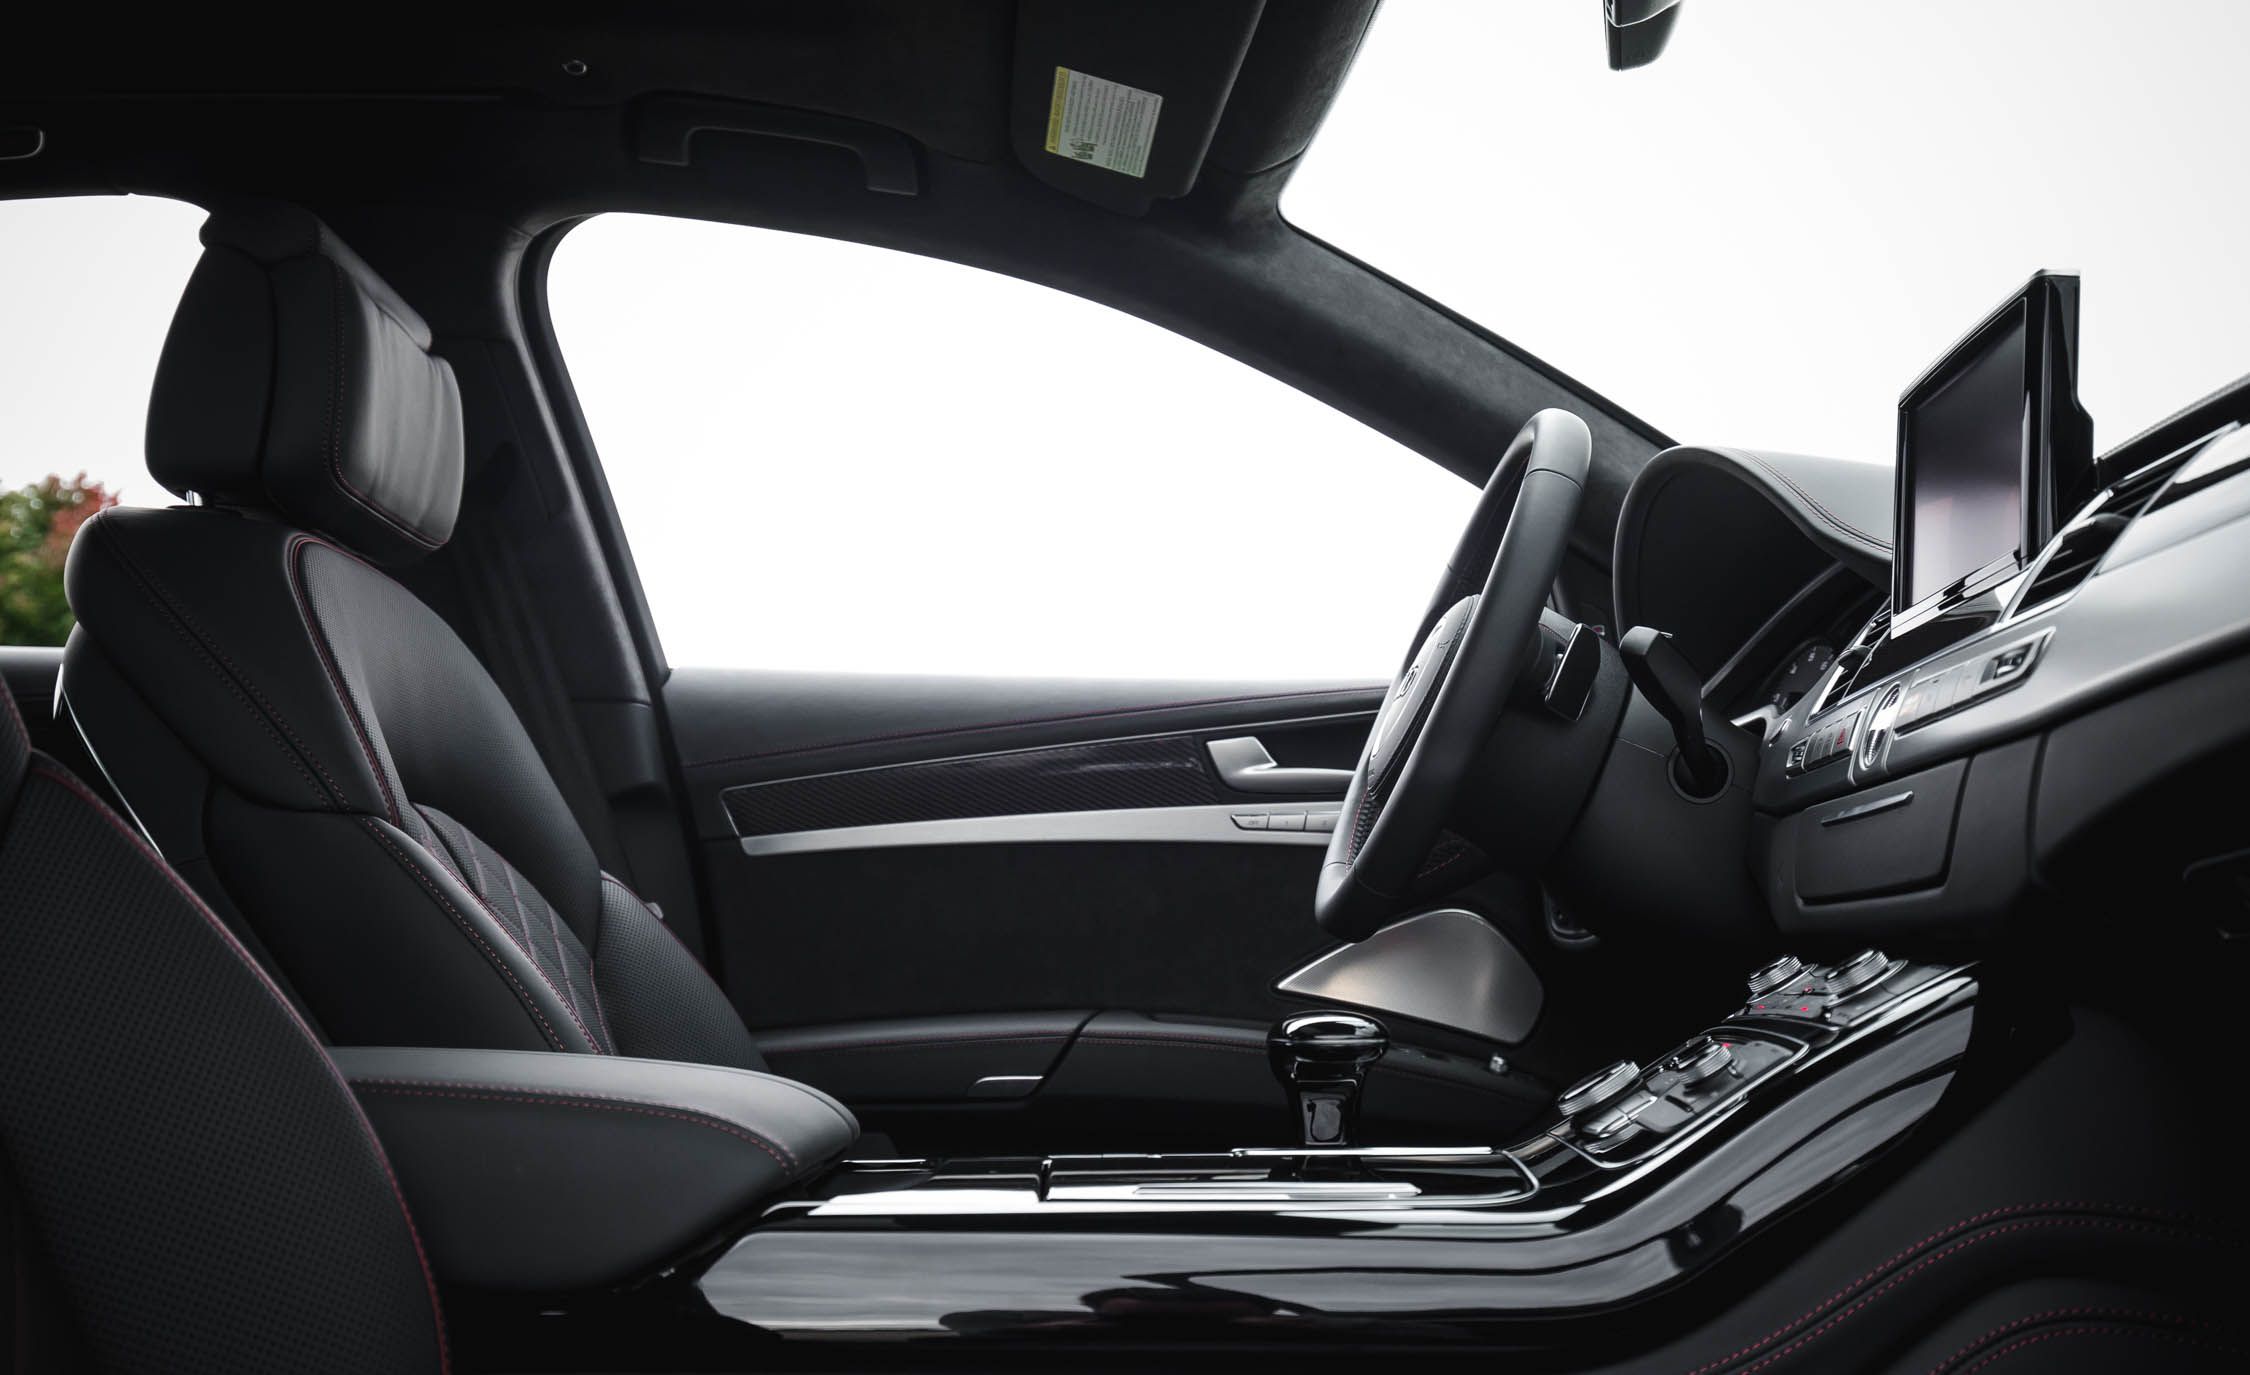 2017 Audi S8 Plus Interior View Cockpit (View 14 of 36)